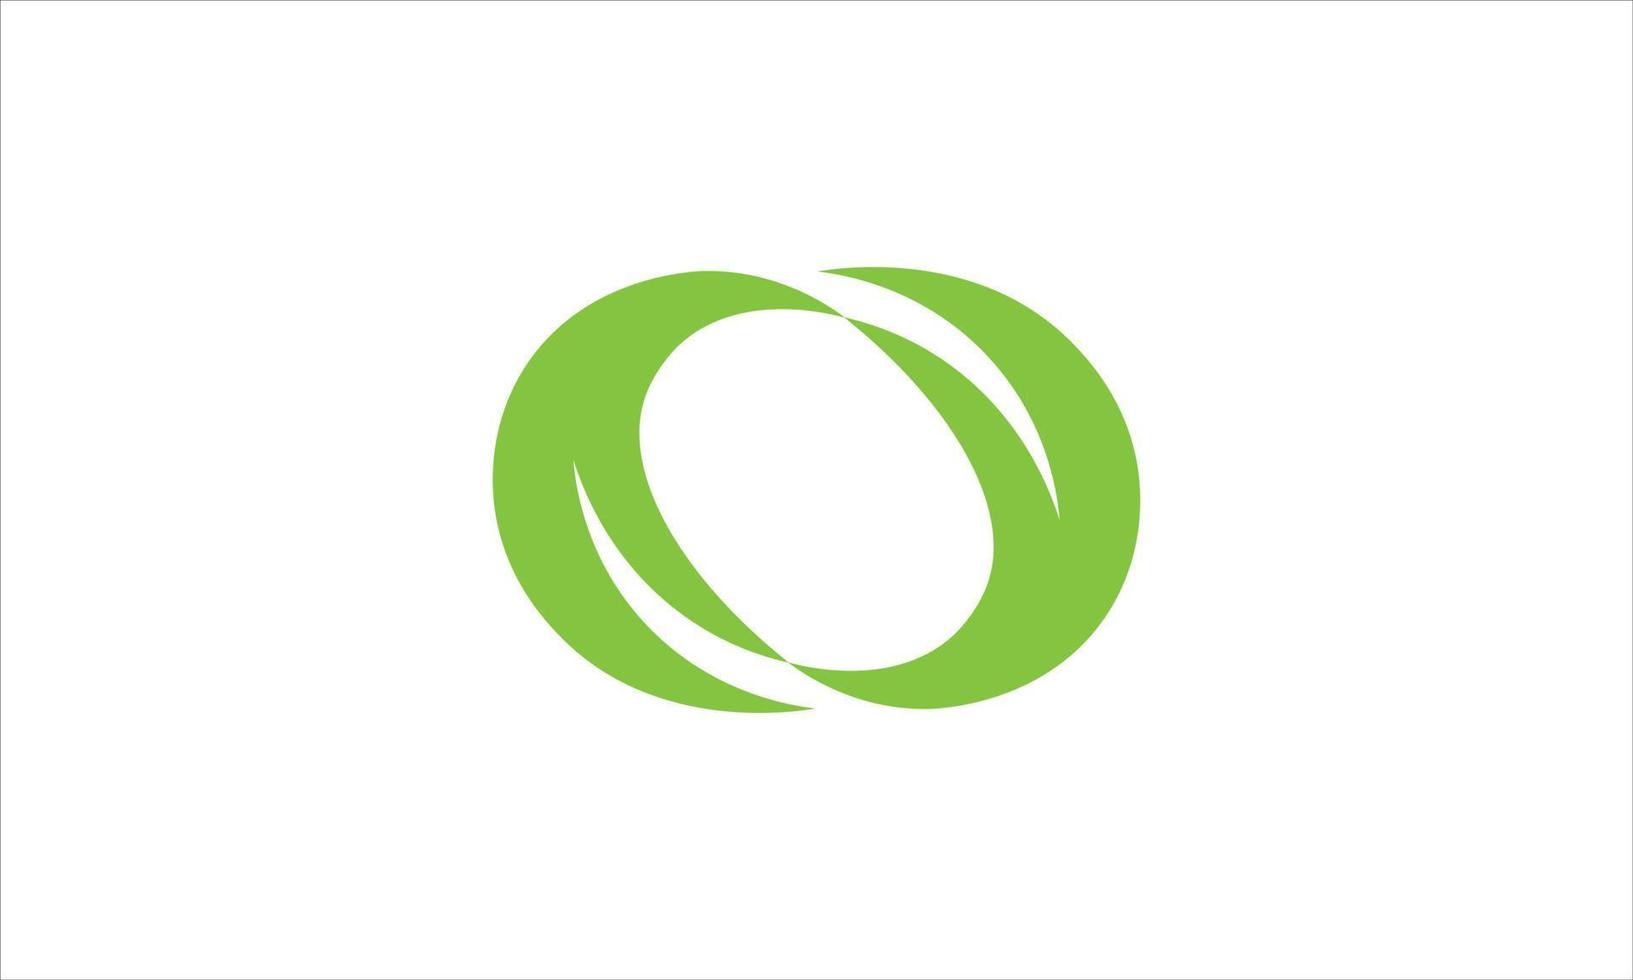 Kreis-Blatt-Logo-Design kostenlose Vektordatei. vektor